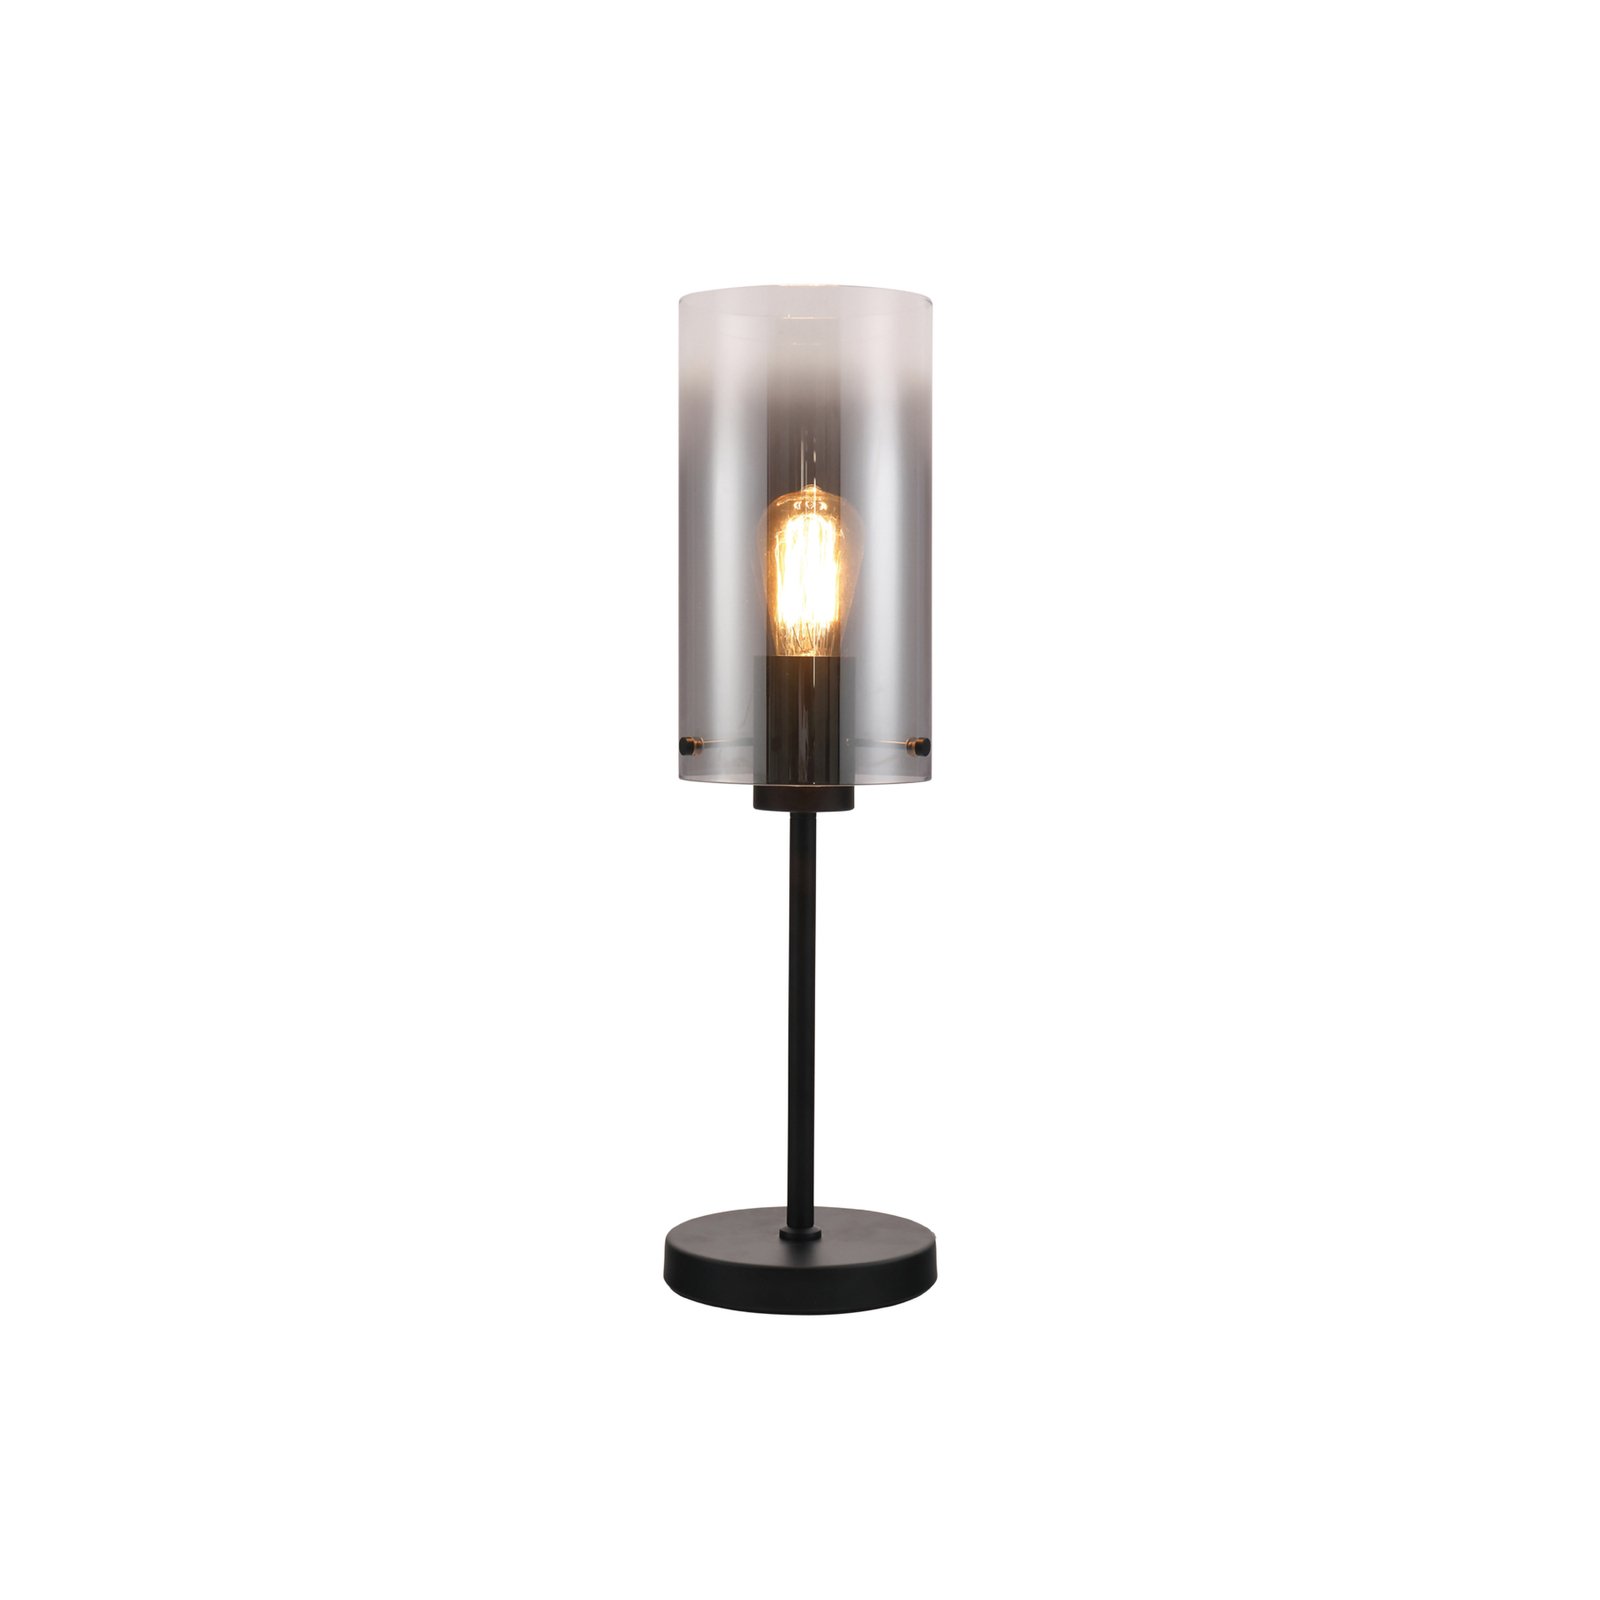 Ventotto tafellamp, zwart/rook, hoogte 57 cm, metaal/glas